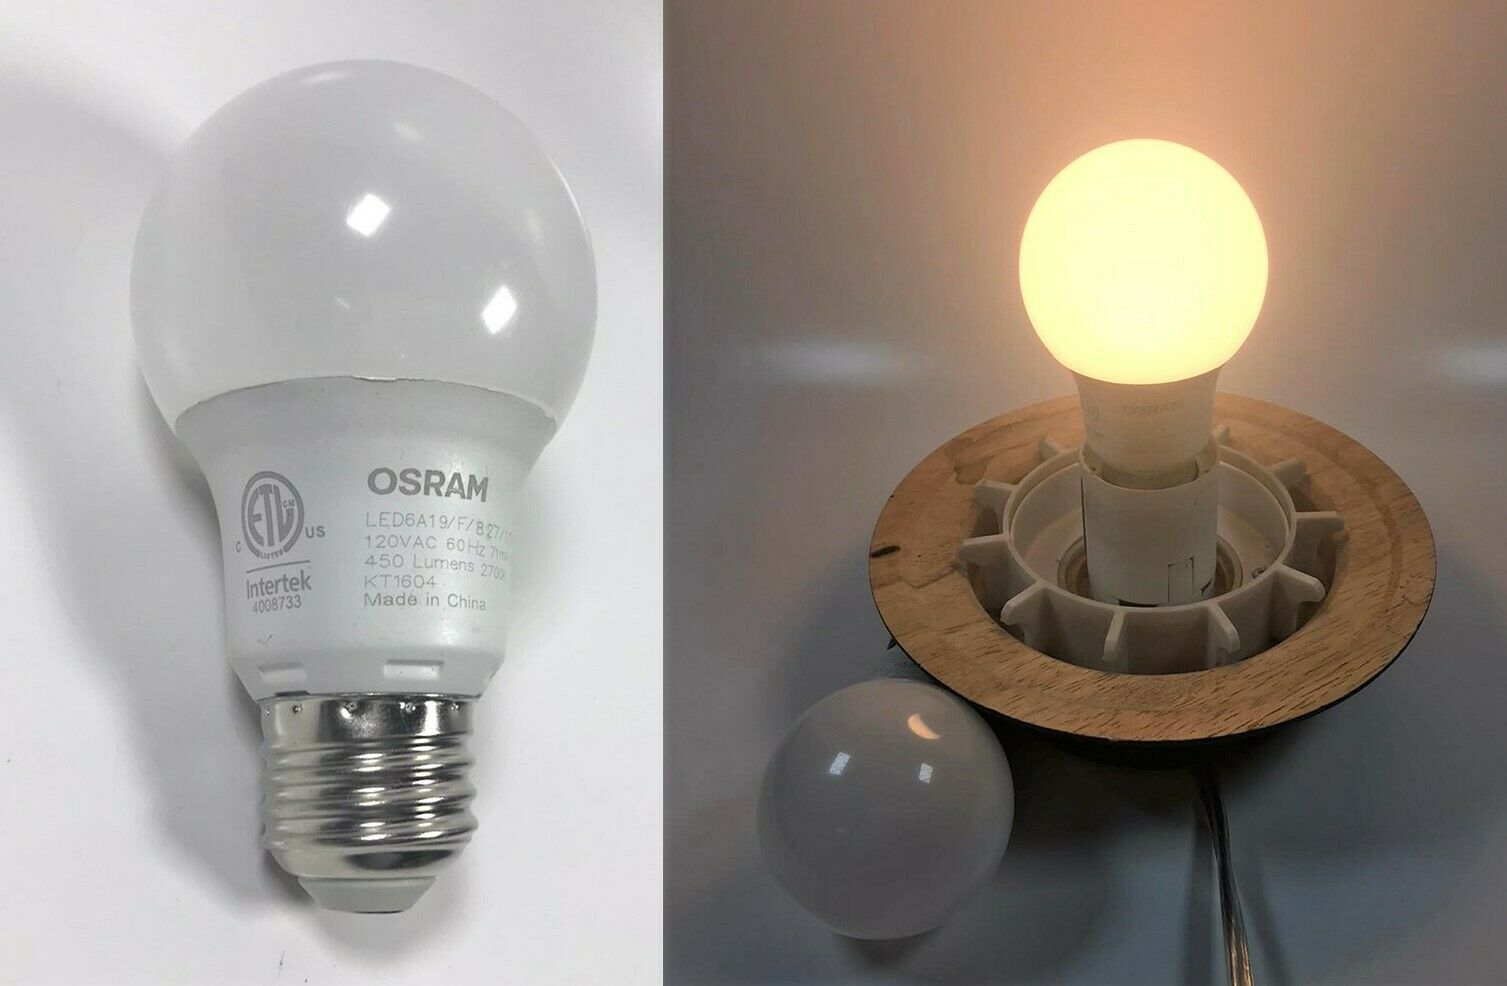 LOT OF 2 OSRAM 450 Lumens A19 LED Light Bulb Soft White - $7.88